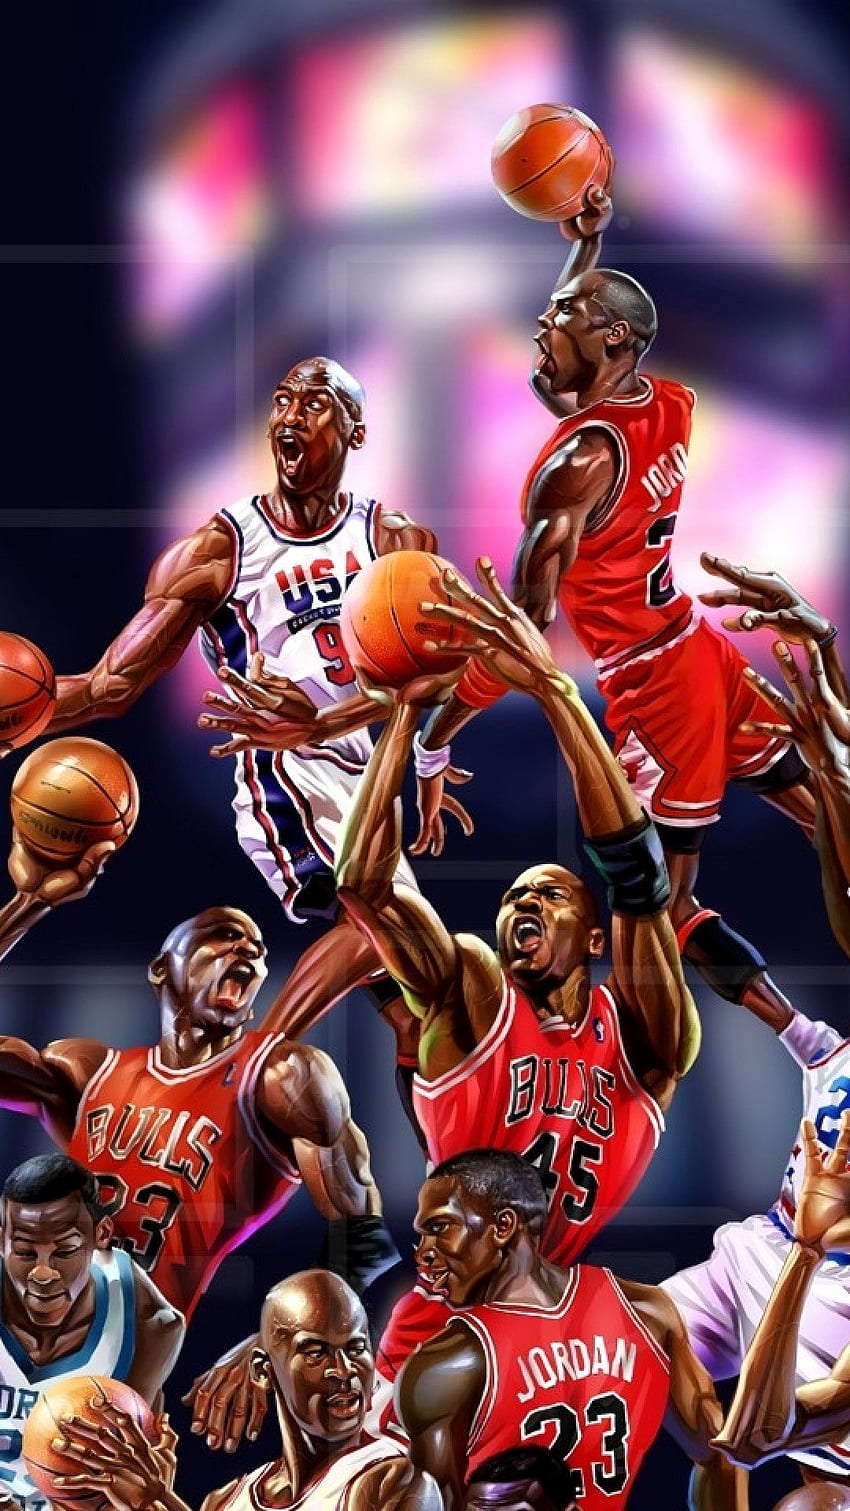 Casio Aguilar NBA wallpaper - High Definition, High Resolution HD Wallpapers  : High Definition, High Resolution HD Wallpapers